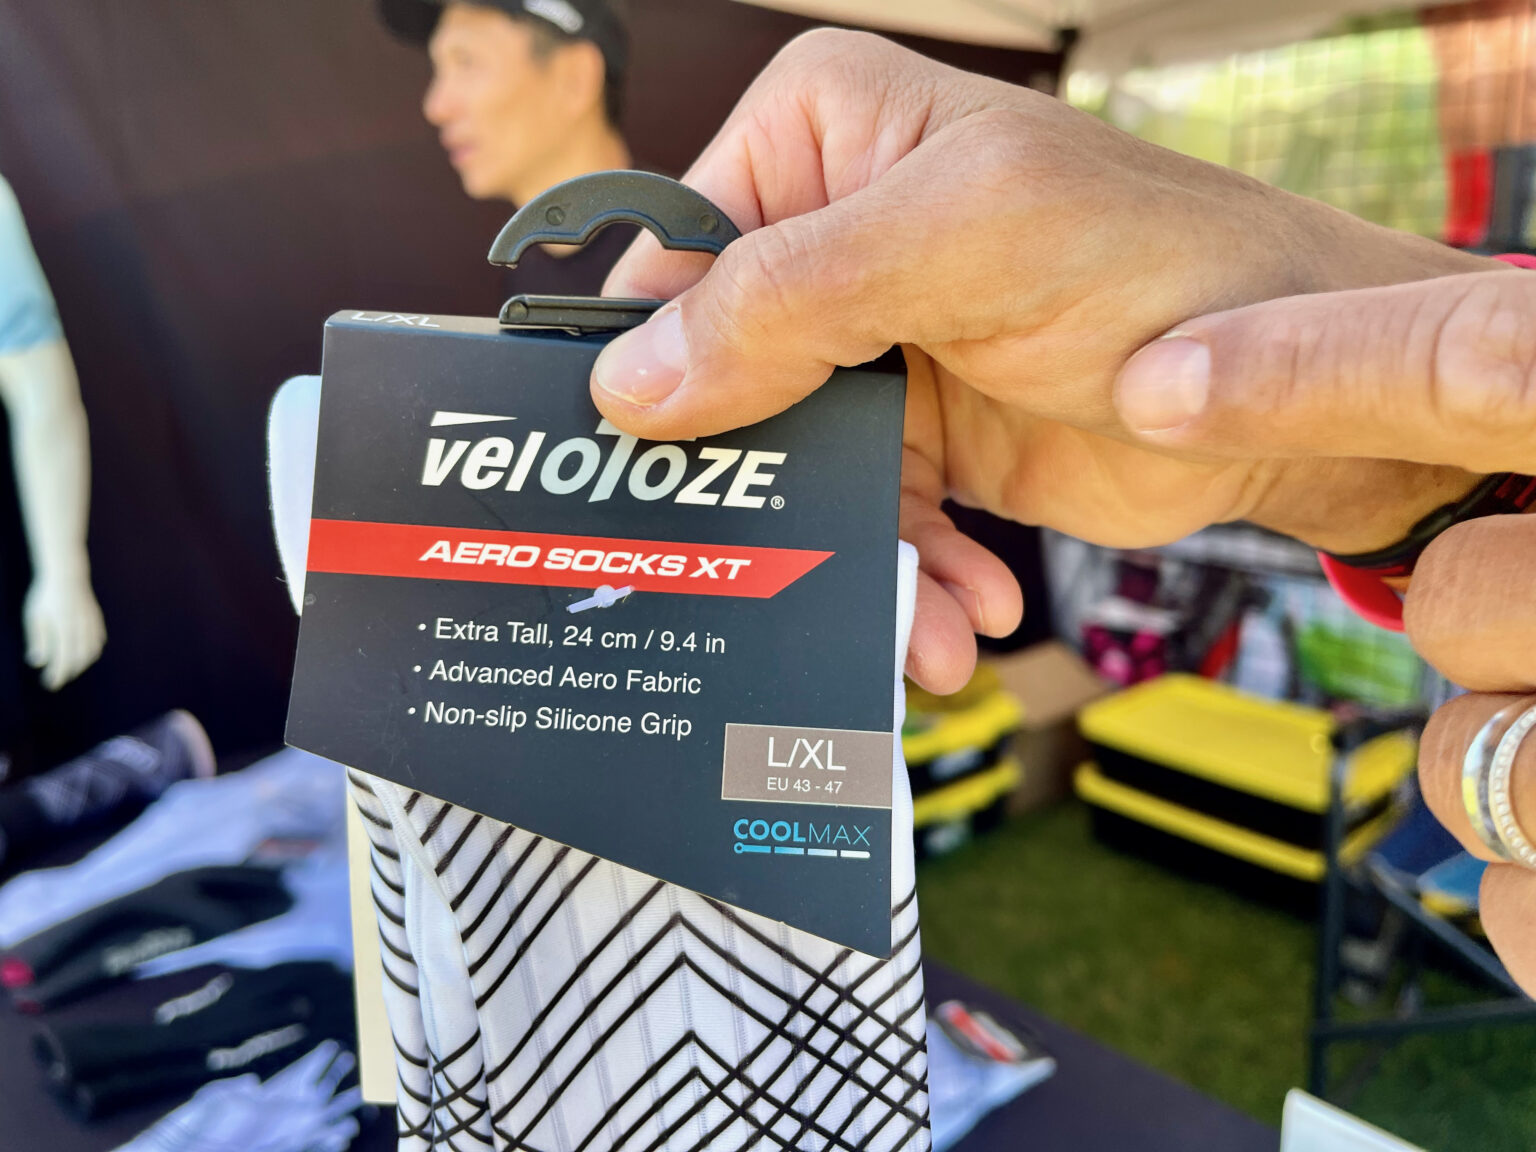 VeloToze Aero Sock XT packaging